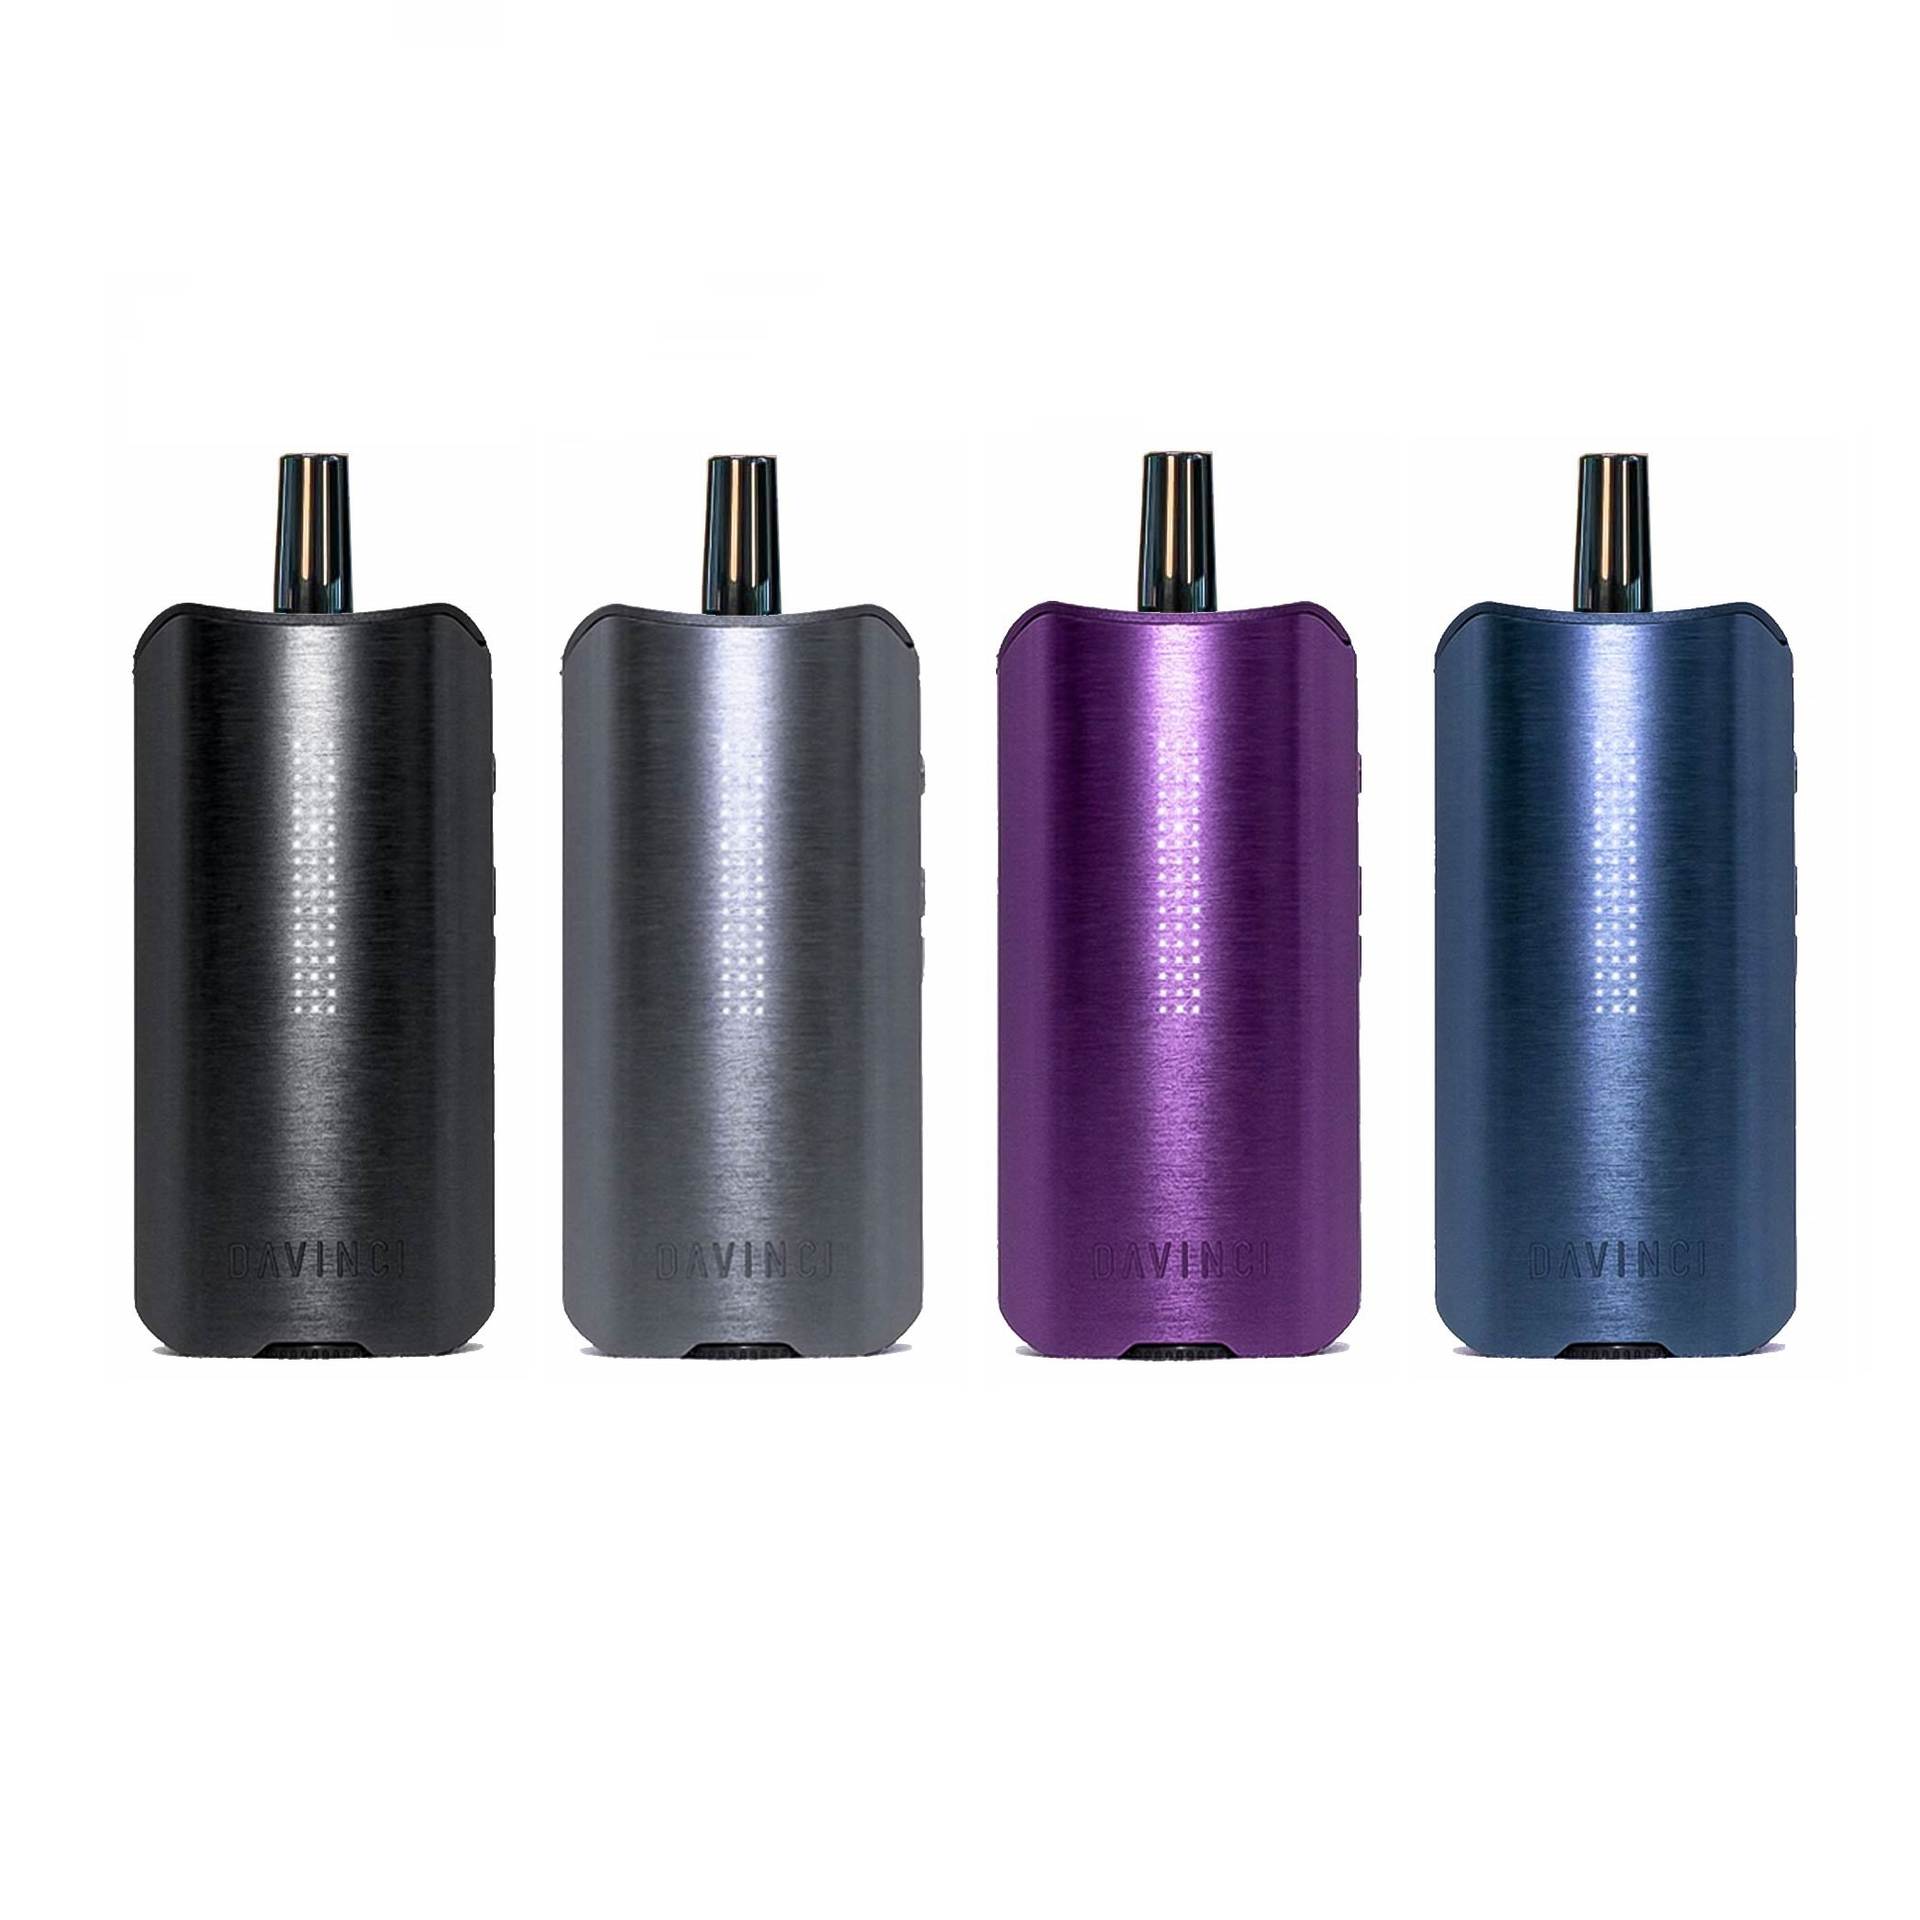 davinci-iq2-vaporizer-portable-dry-herb-vaporizer